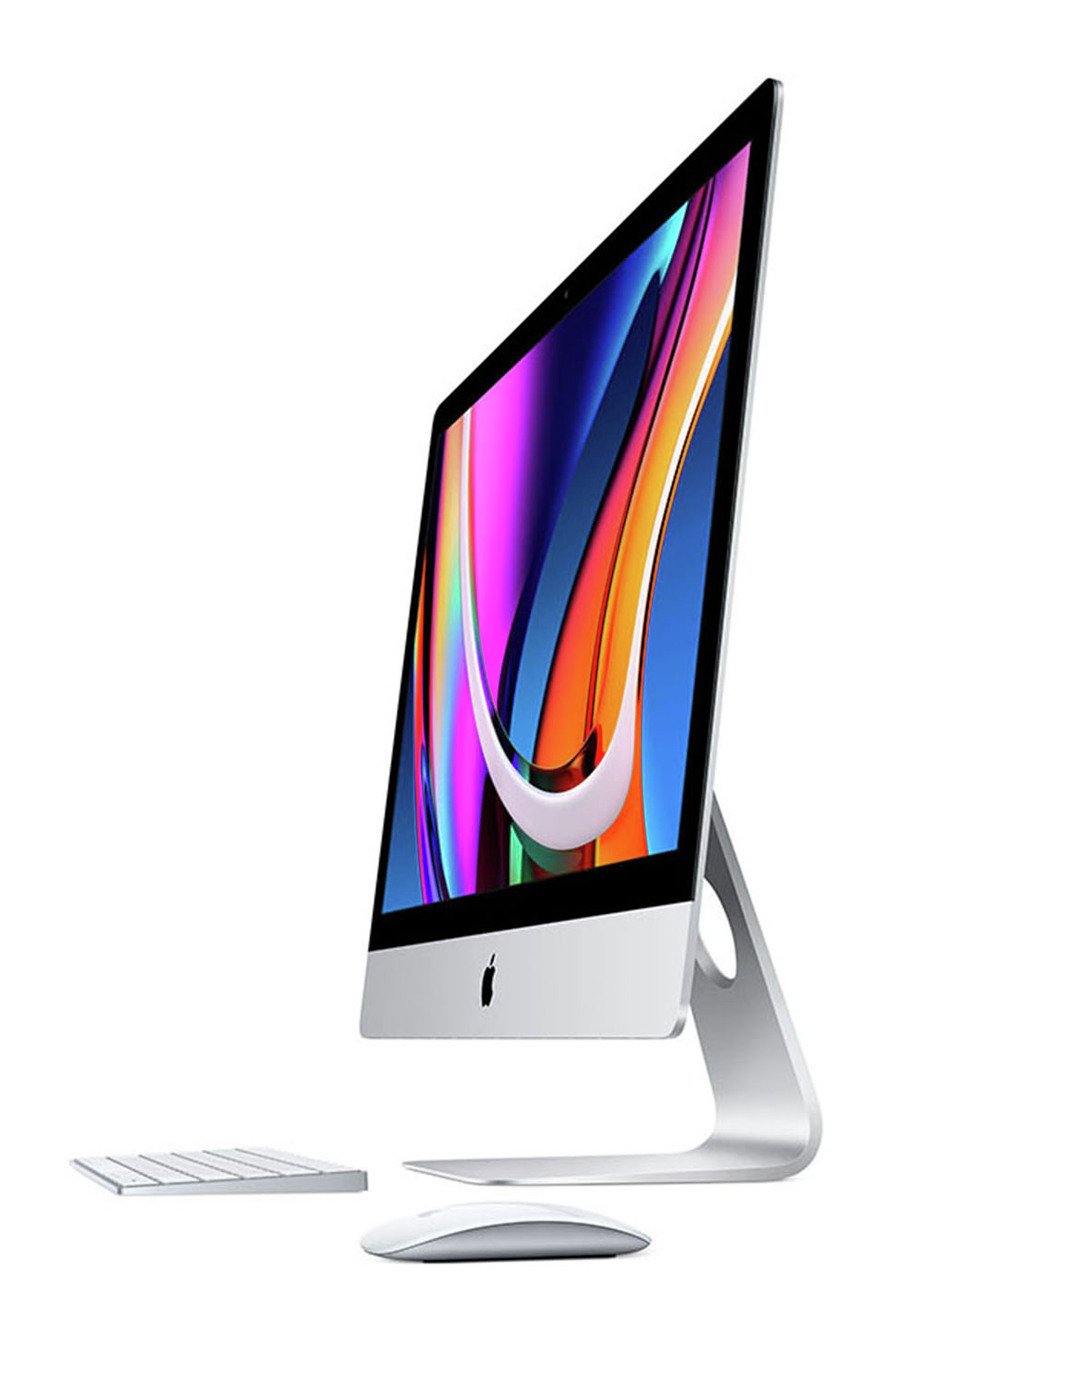 Apple iMac 2020 27in Retina 5k Display i7 8GB 512GB Desktop Review